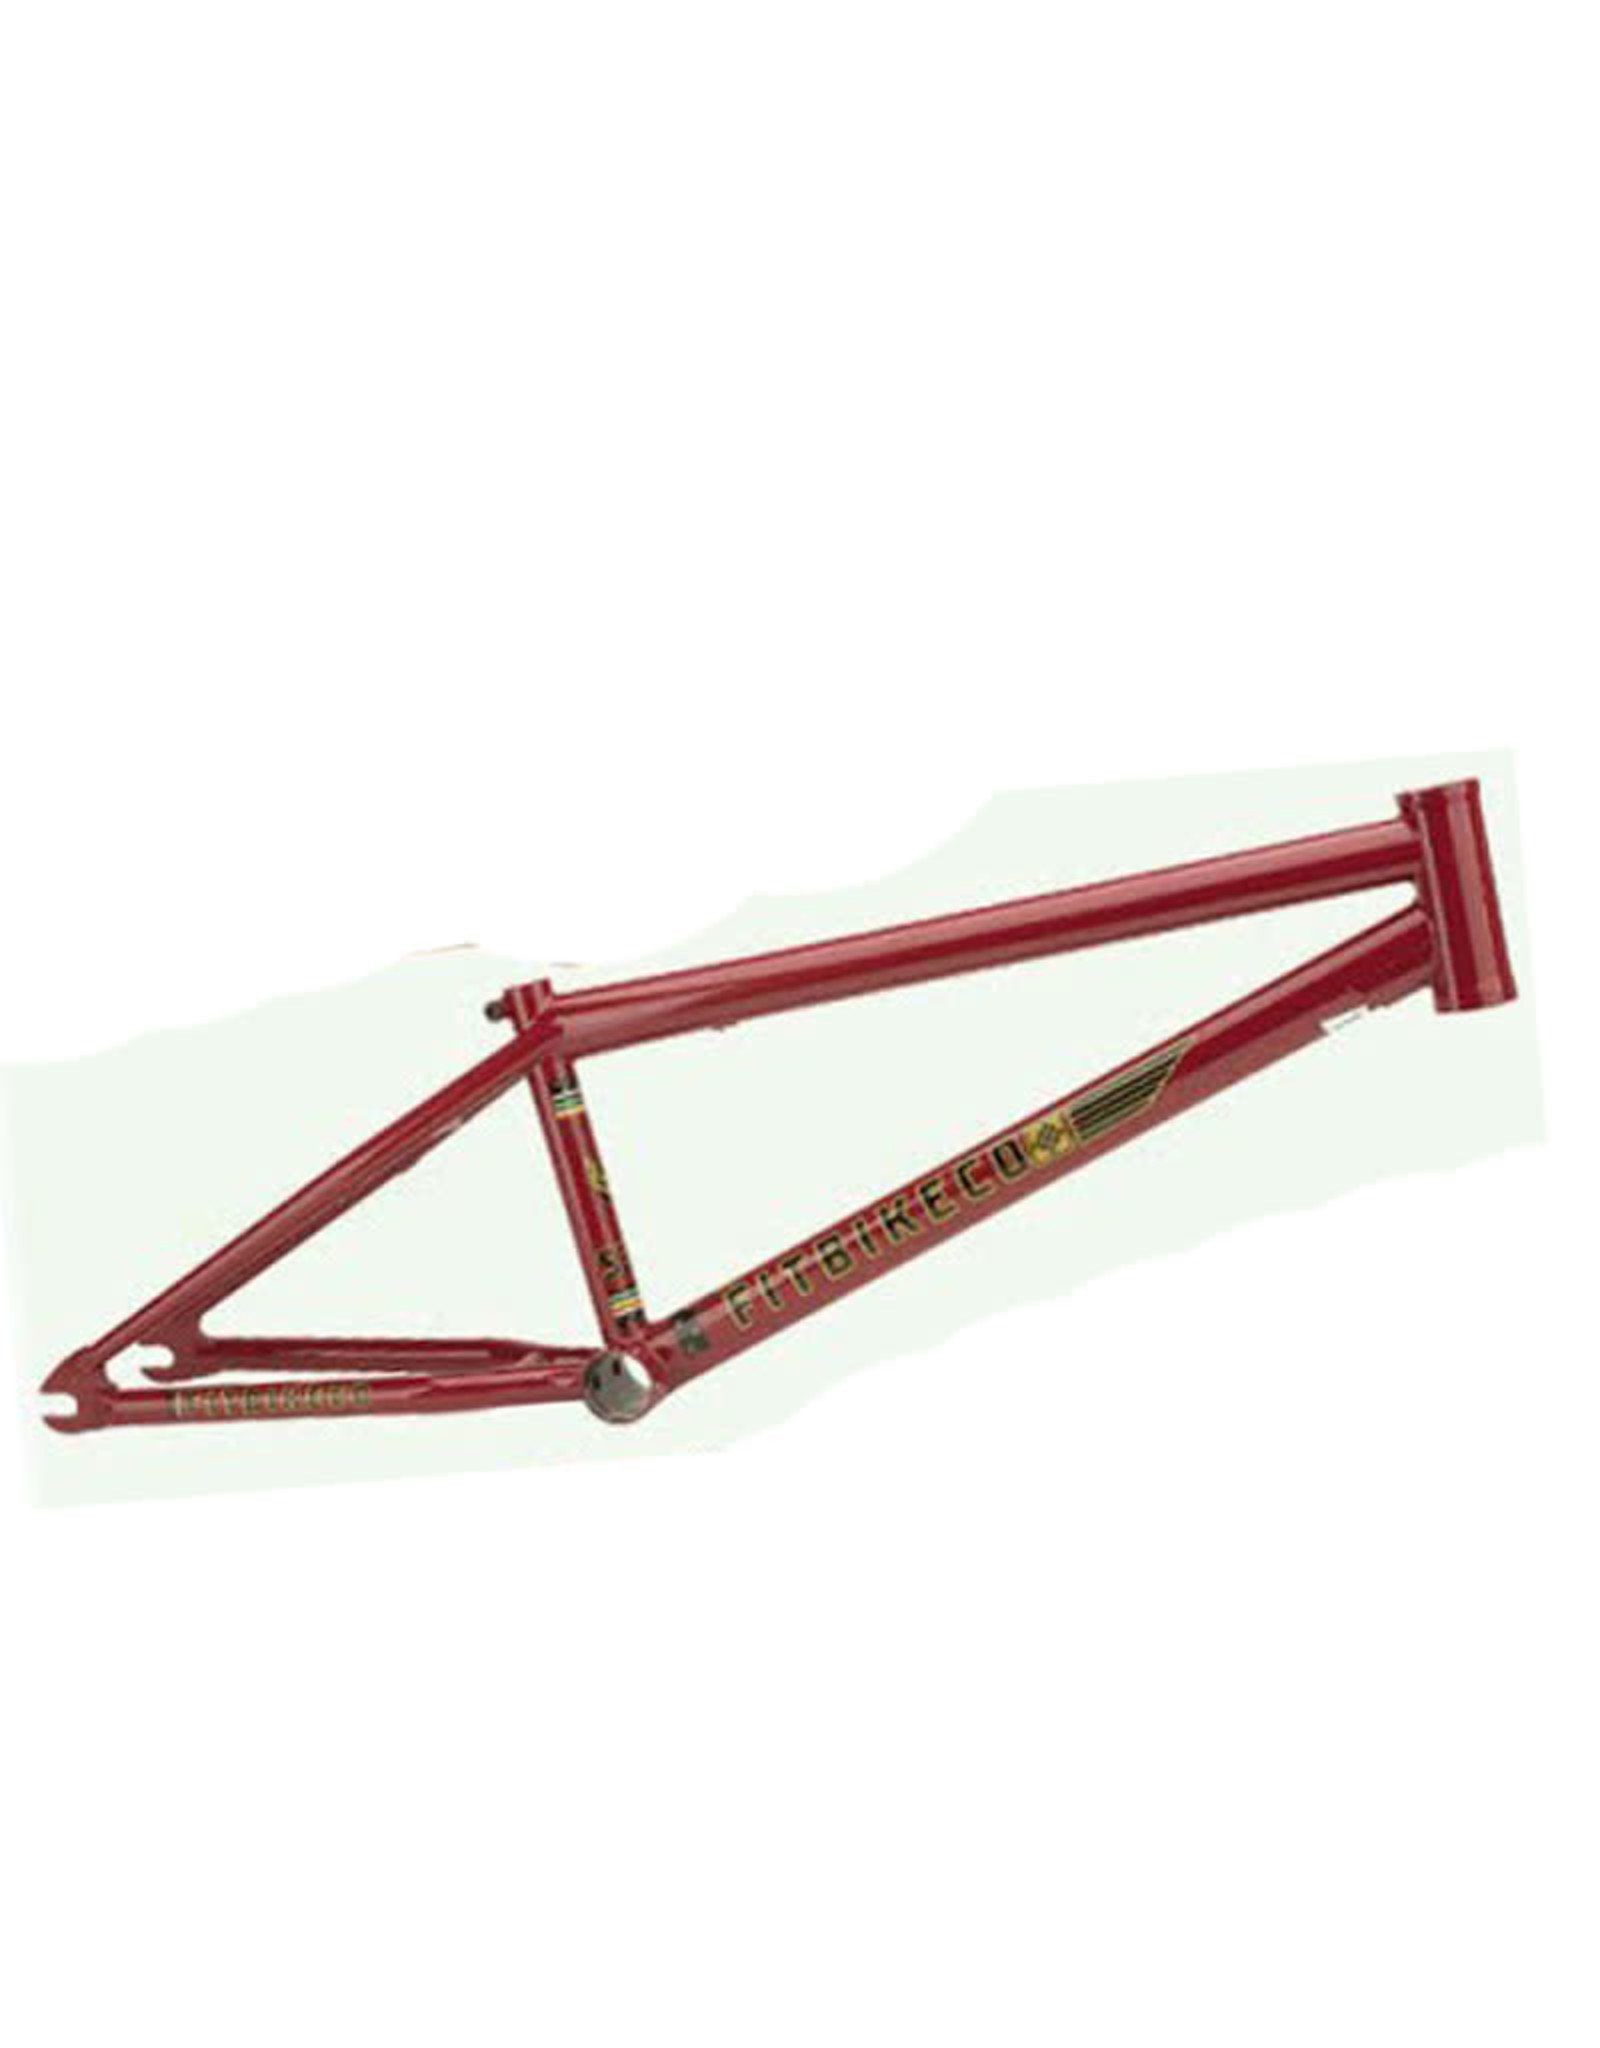 fit bike frame